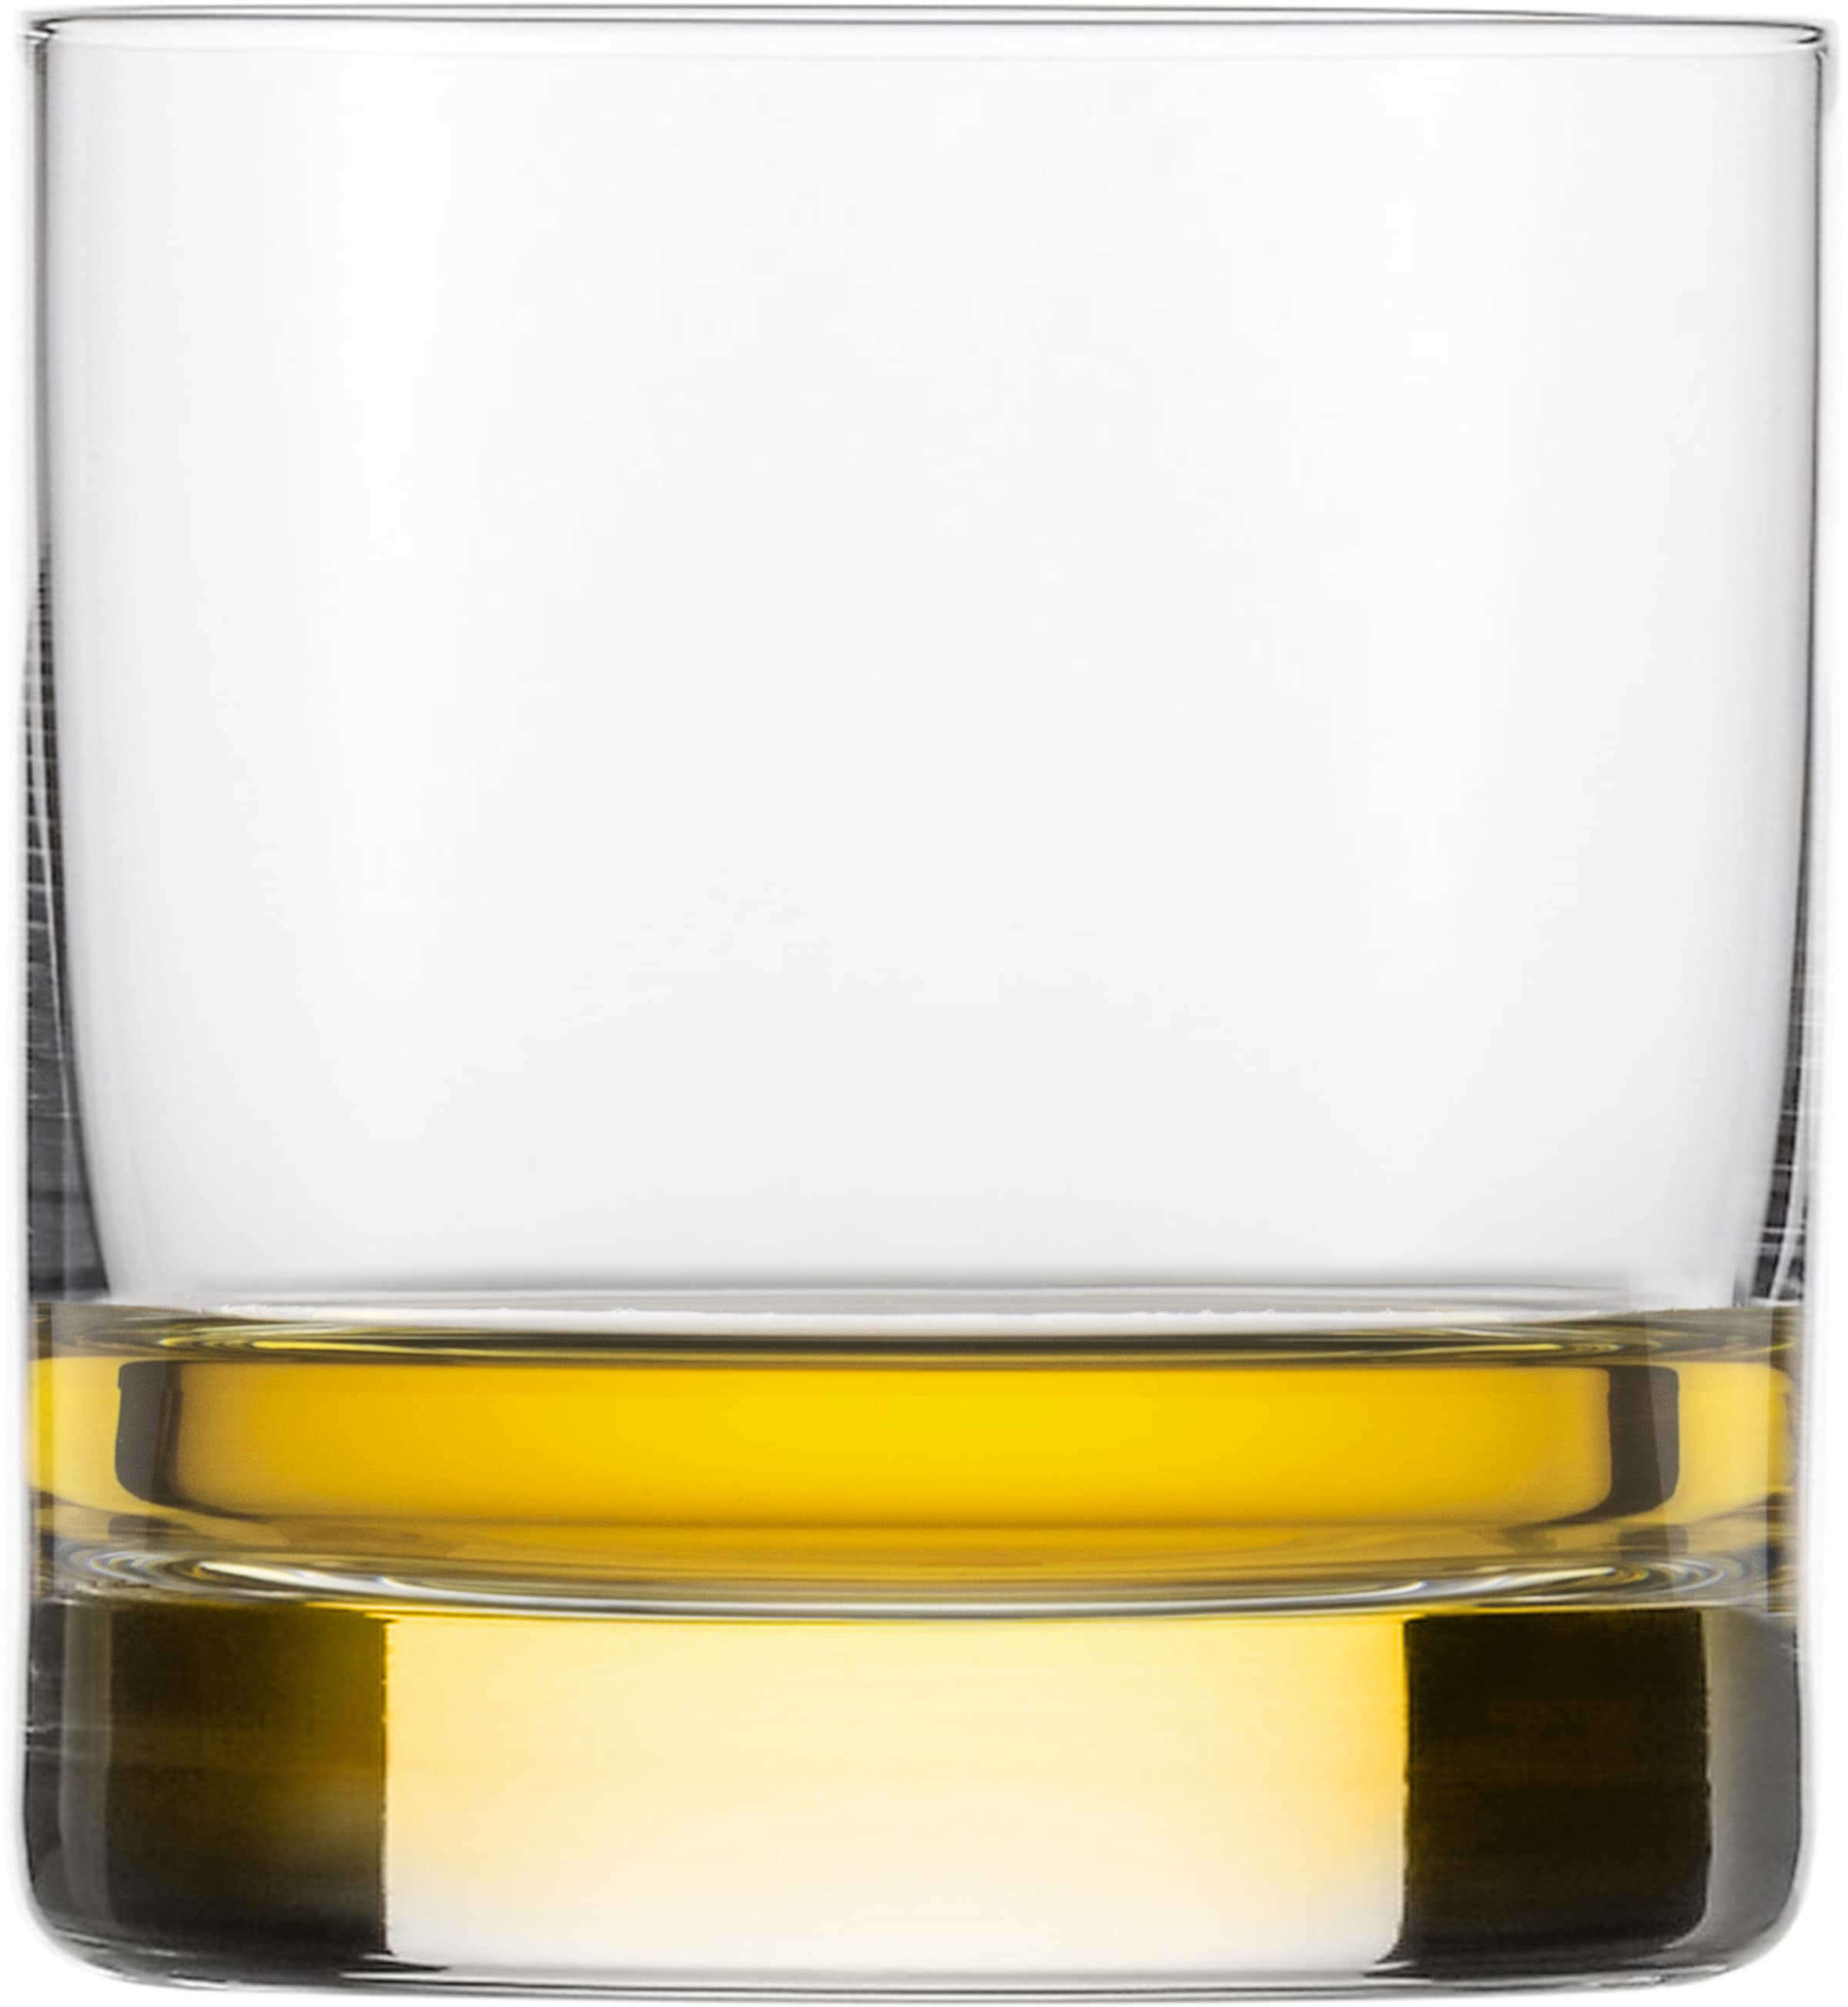 Eisch Whiskyglas »Superior SensisPlus«, (Set, 4 tlg.), bleifrei, 400 ml, 4-teilig